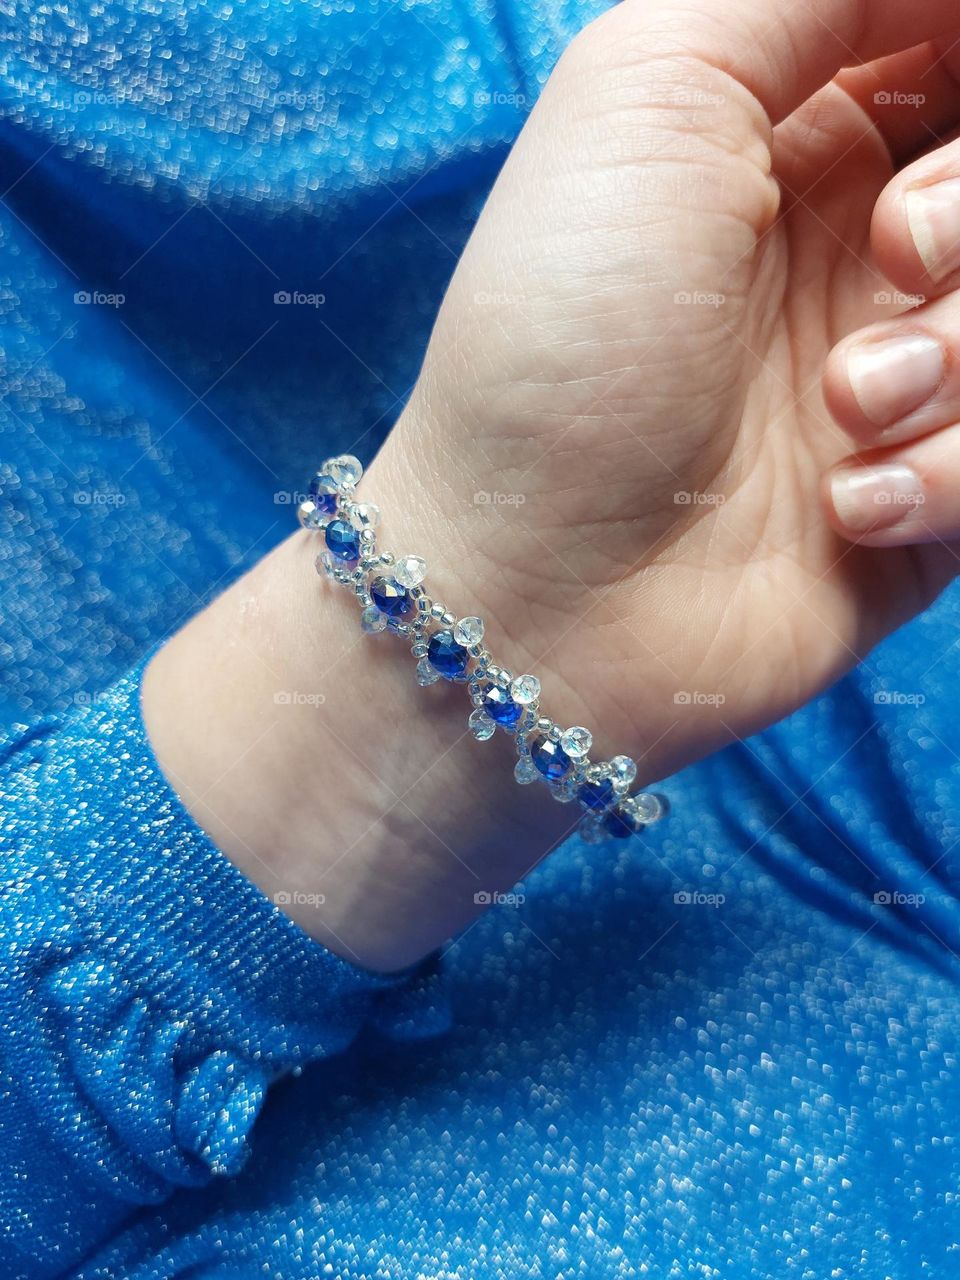 handmade bracelet with blue sparkly stones.